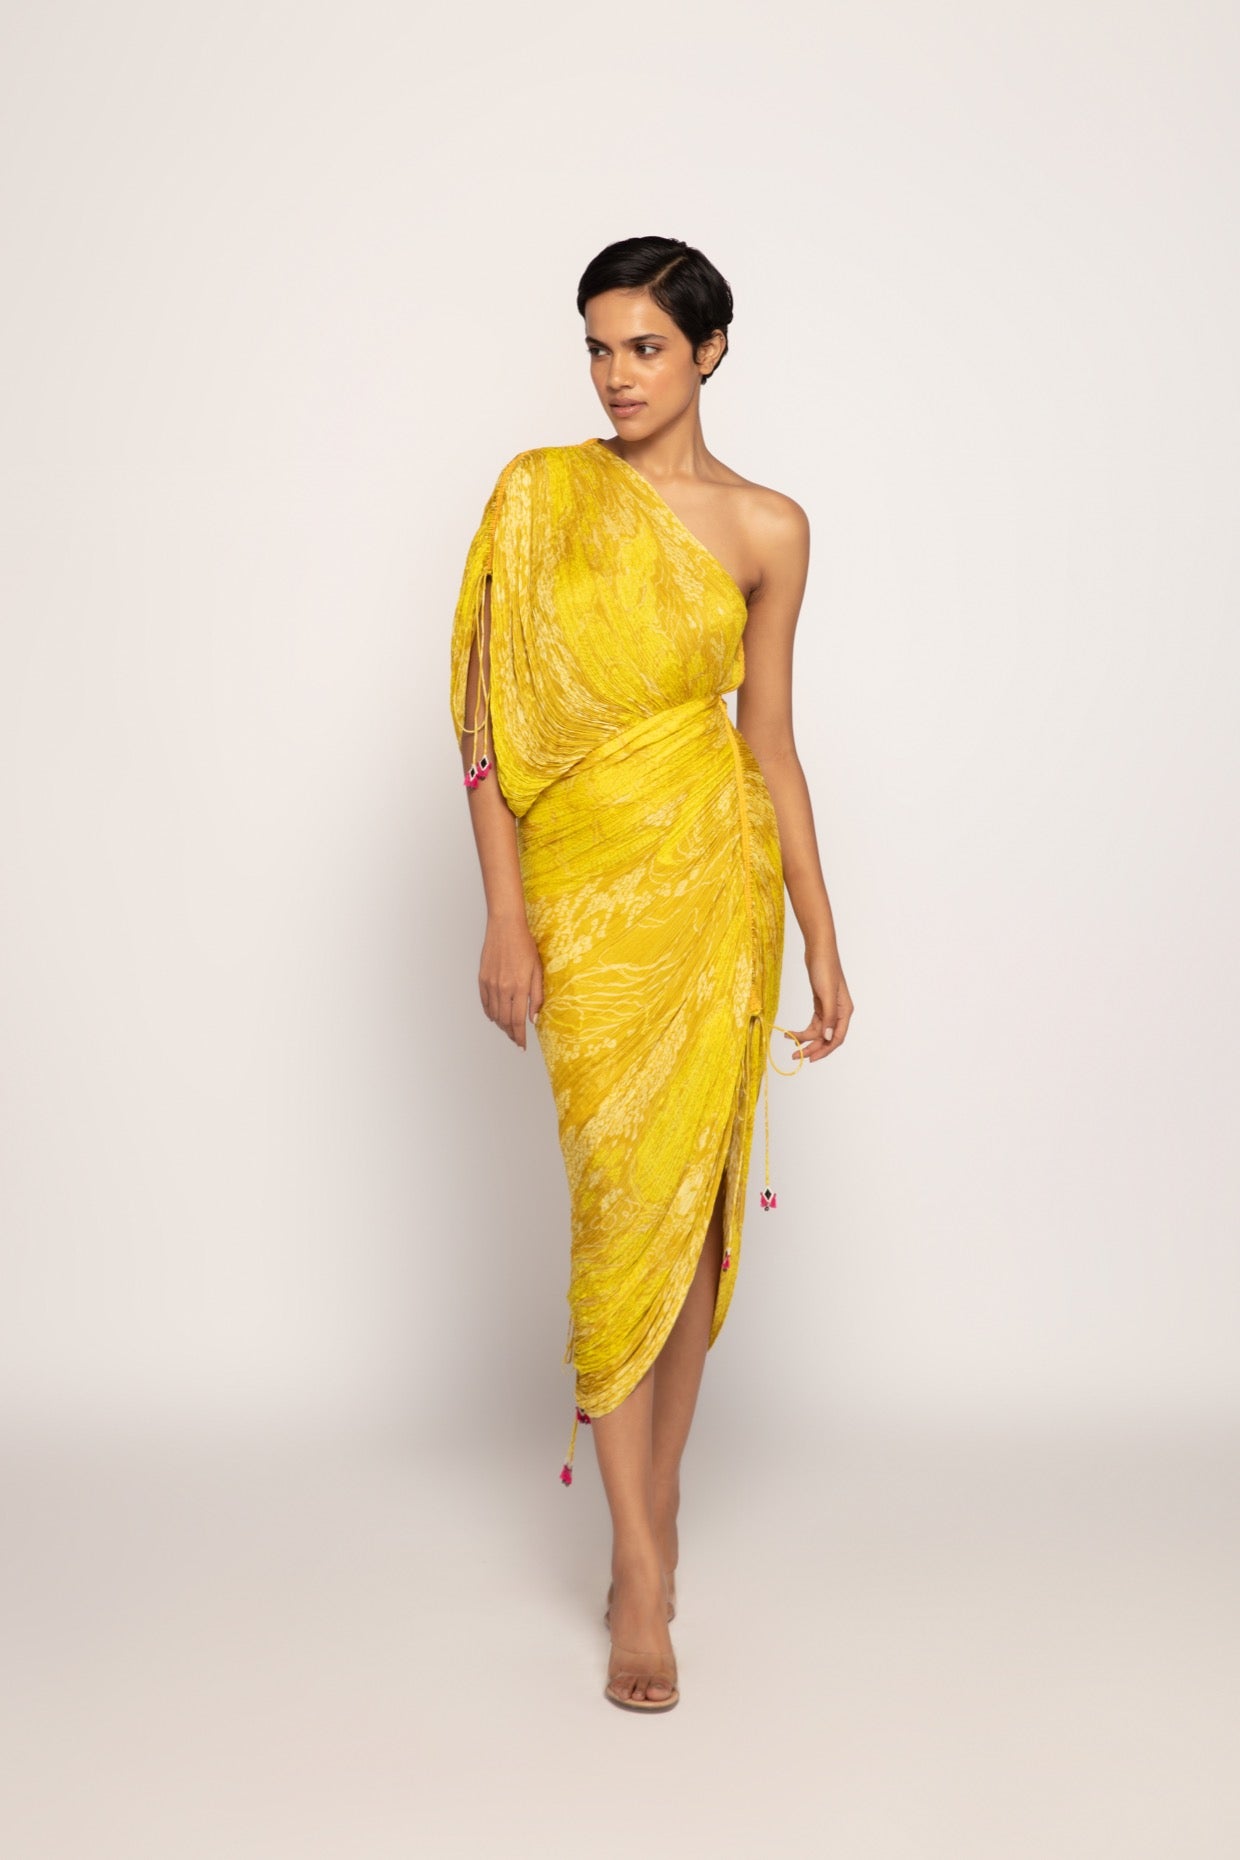 Perinwinkle Bandhani Print, Hand Micro Pleated Sari Style Dress